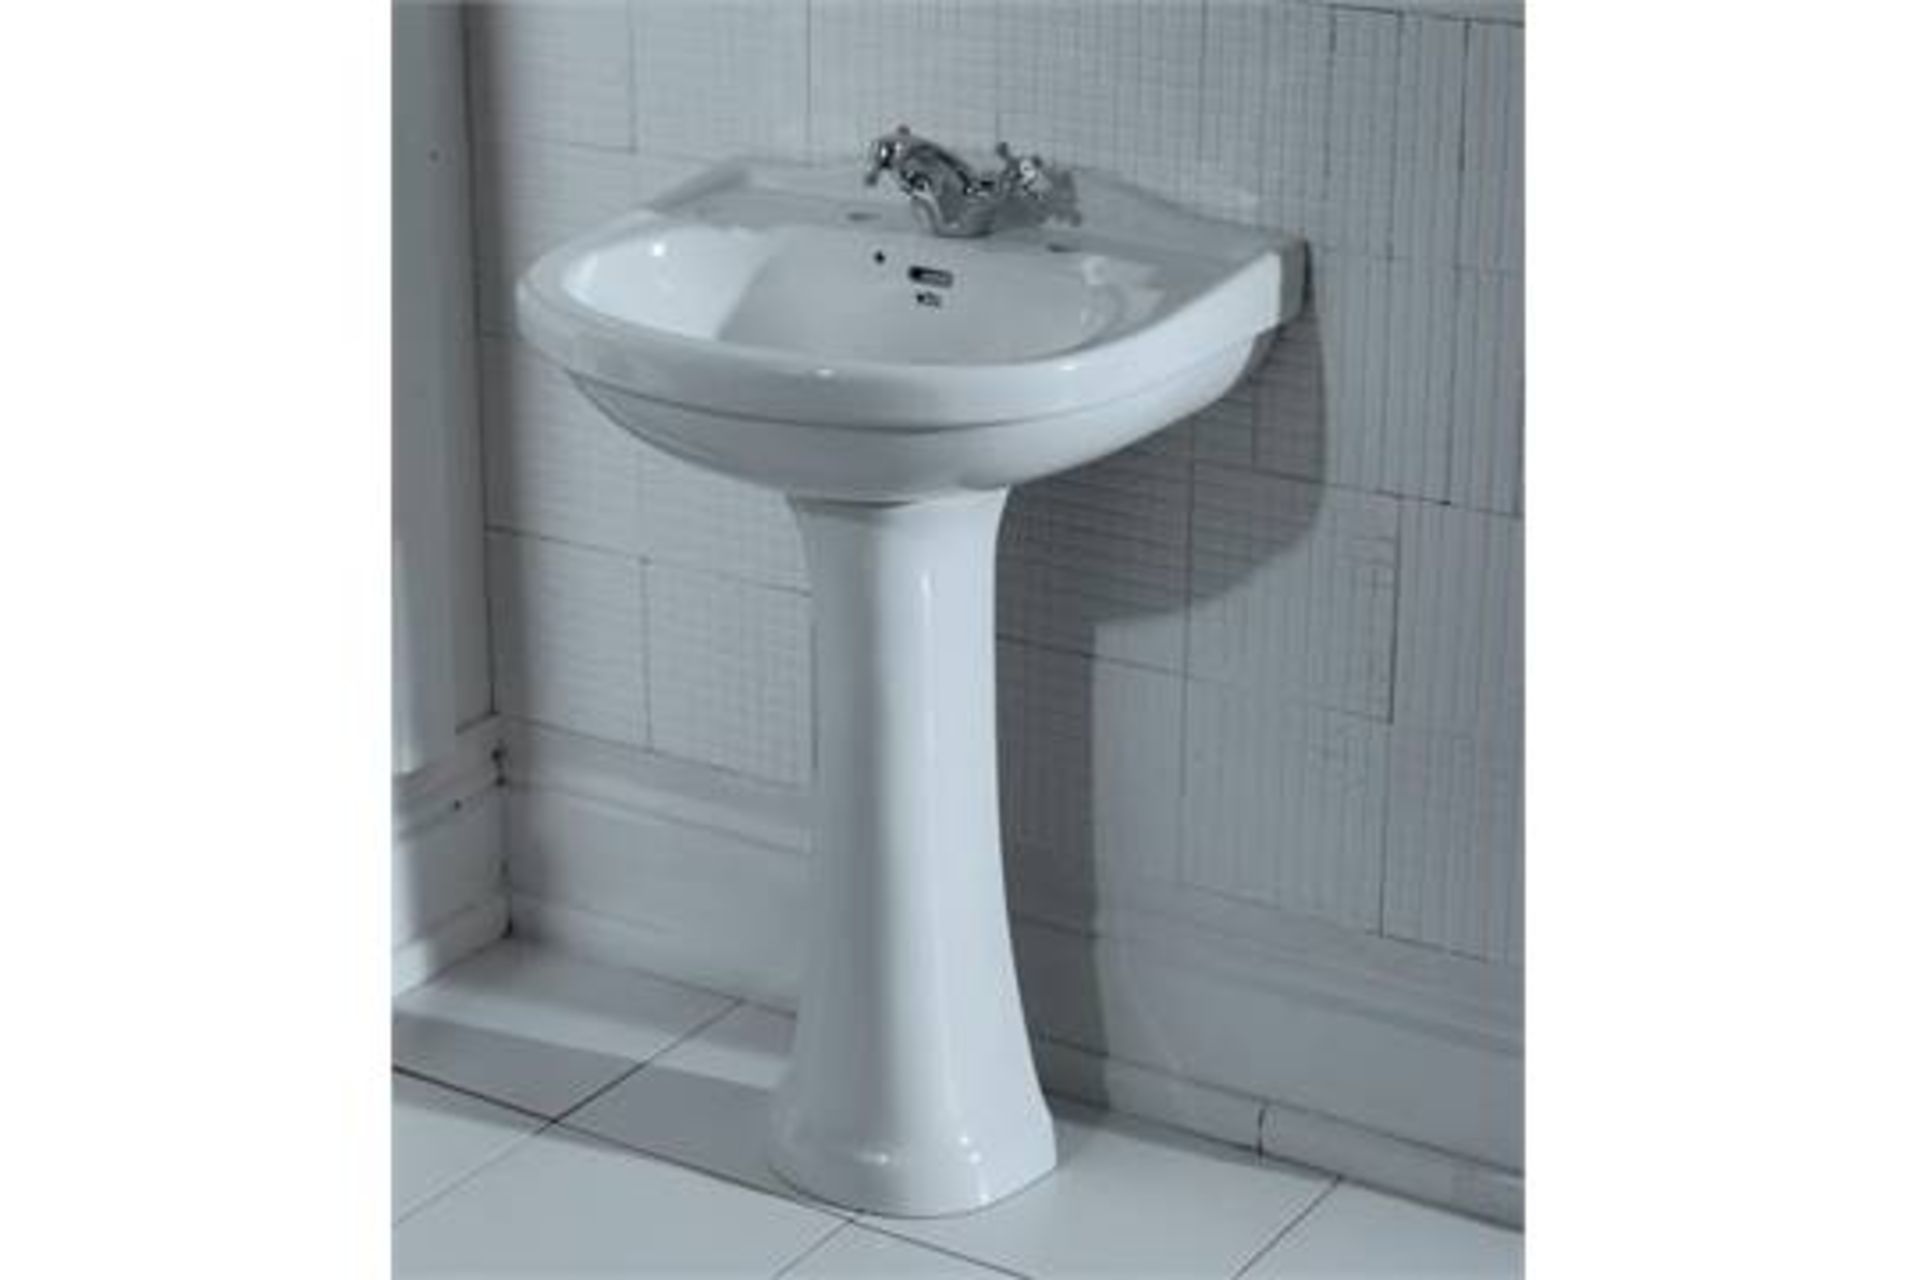 20 x Vogue Bathrooms CARLTON Single Tap Hole SINK BASINS With Pedestals - 450mm Width - Brand New